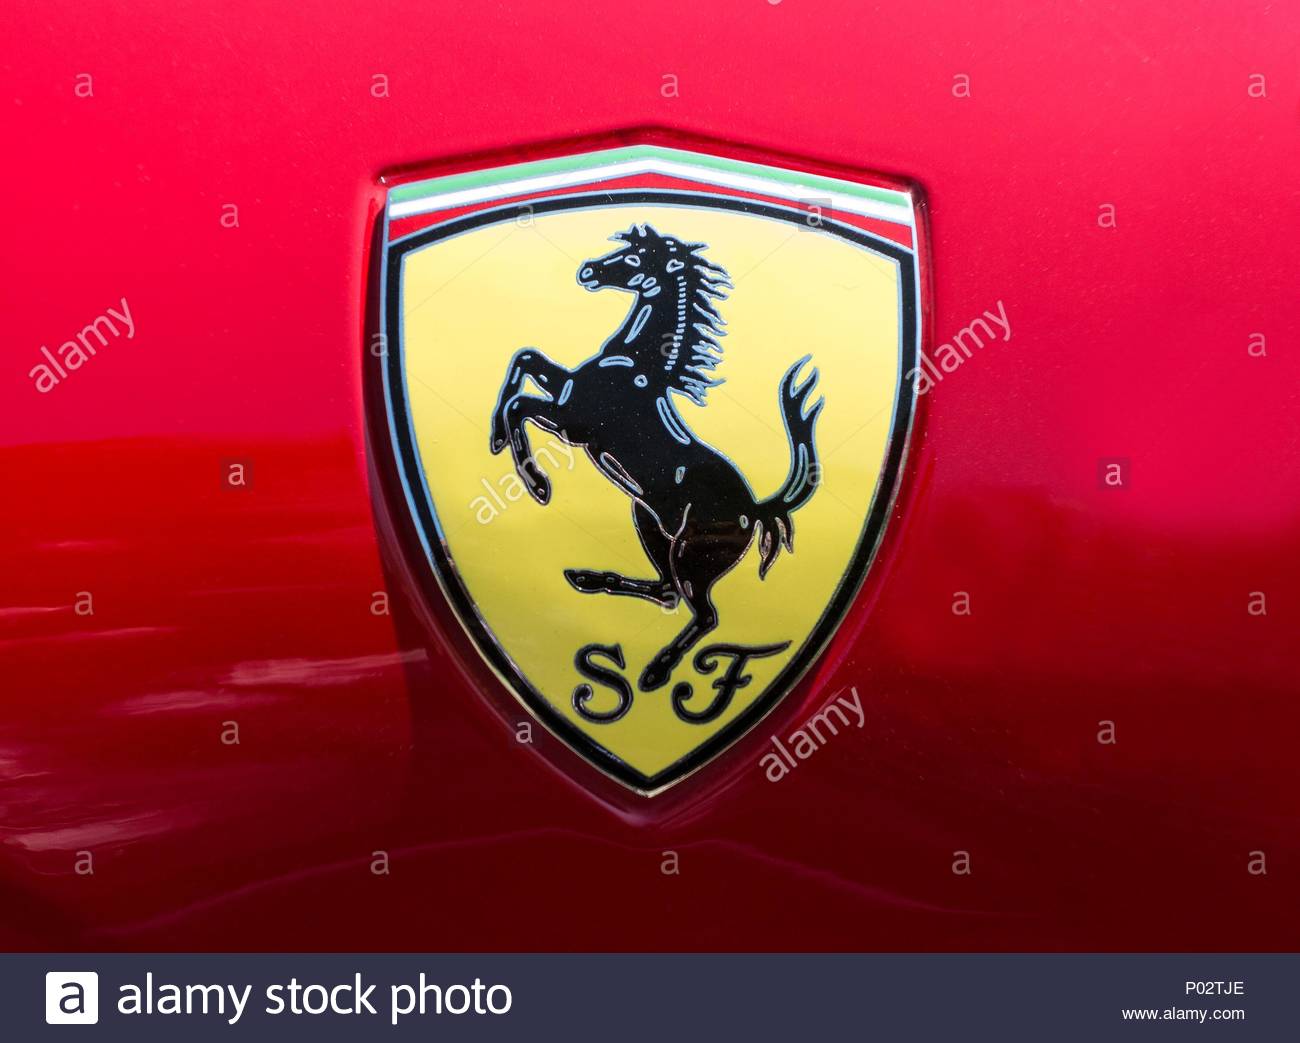 Ferrari logo on red background Stock Photo 206587654   Alamy 1300x1043